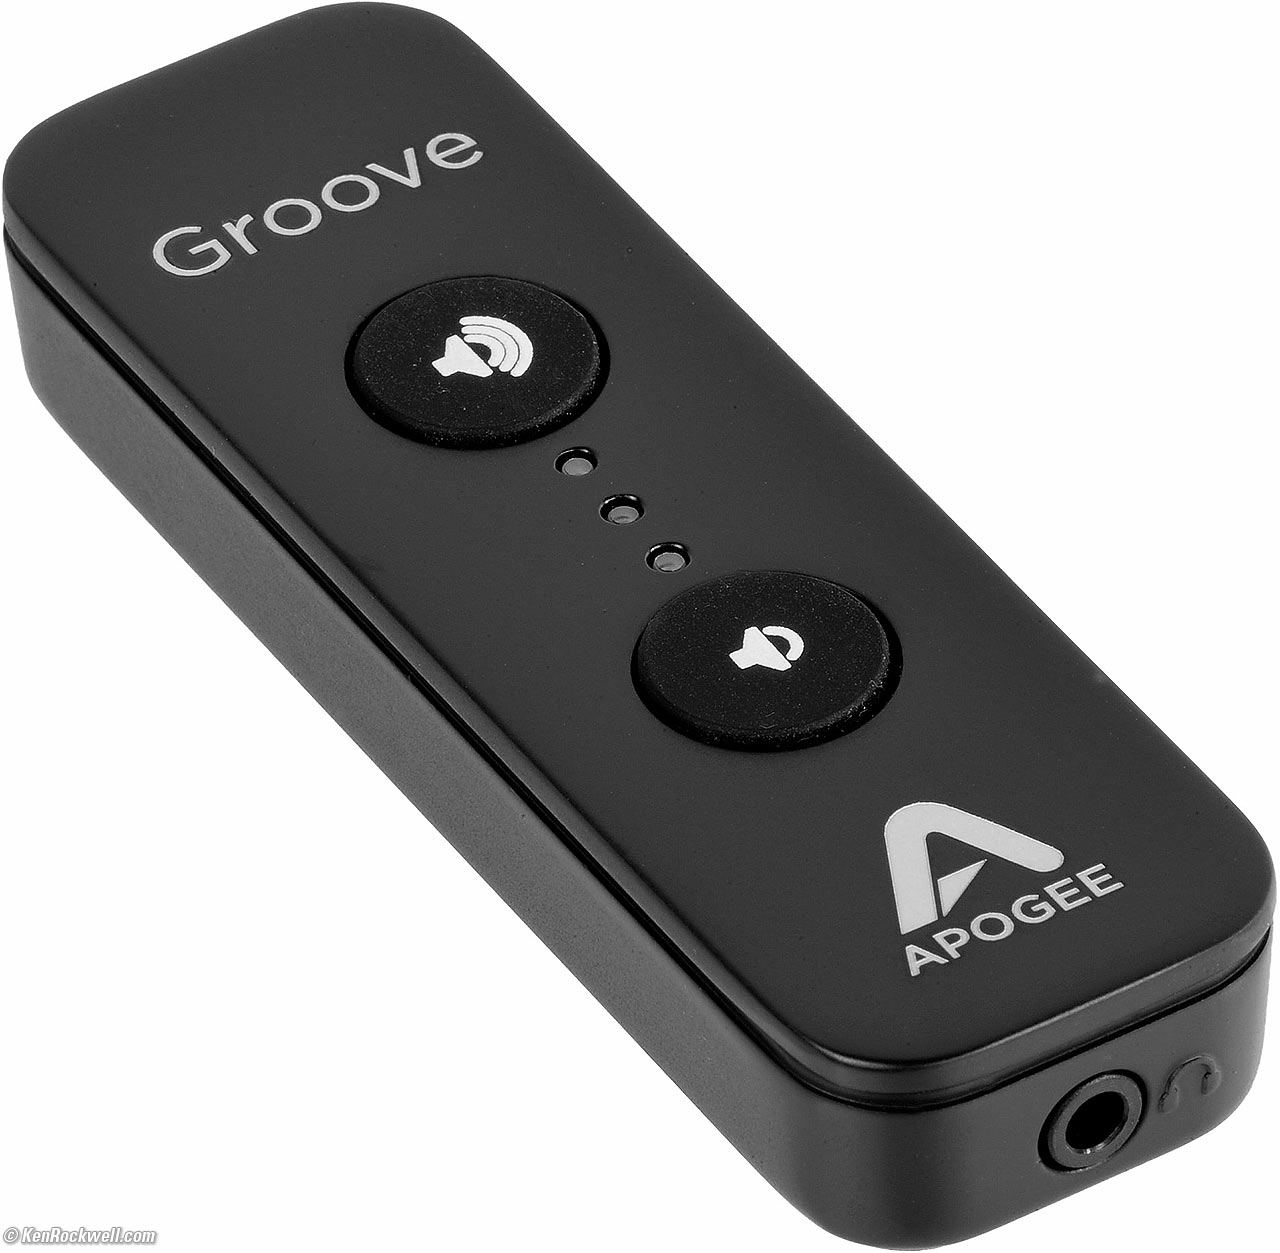 Apogee Groove USB DAC and Headphone Amp Audio Shop Dubai